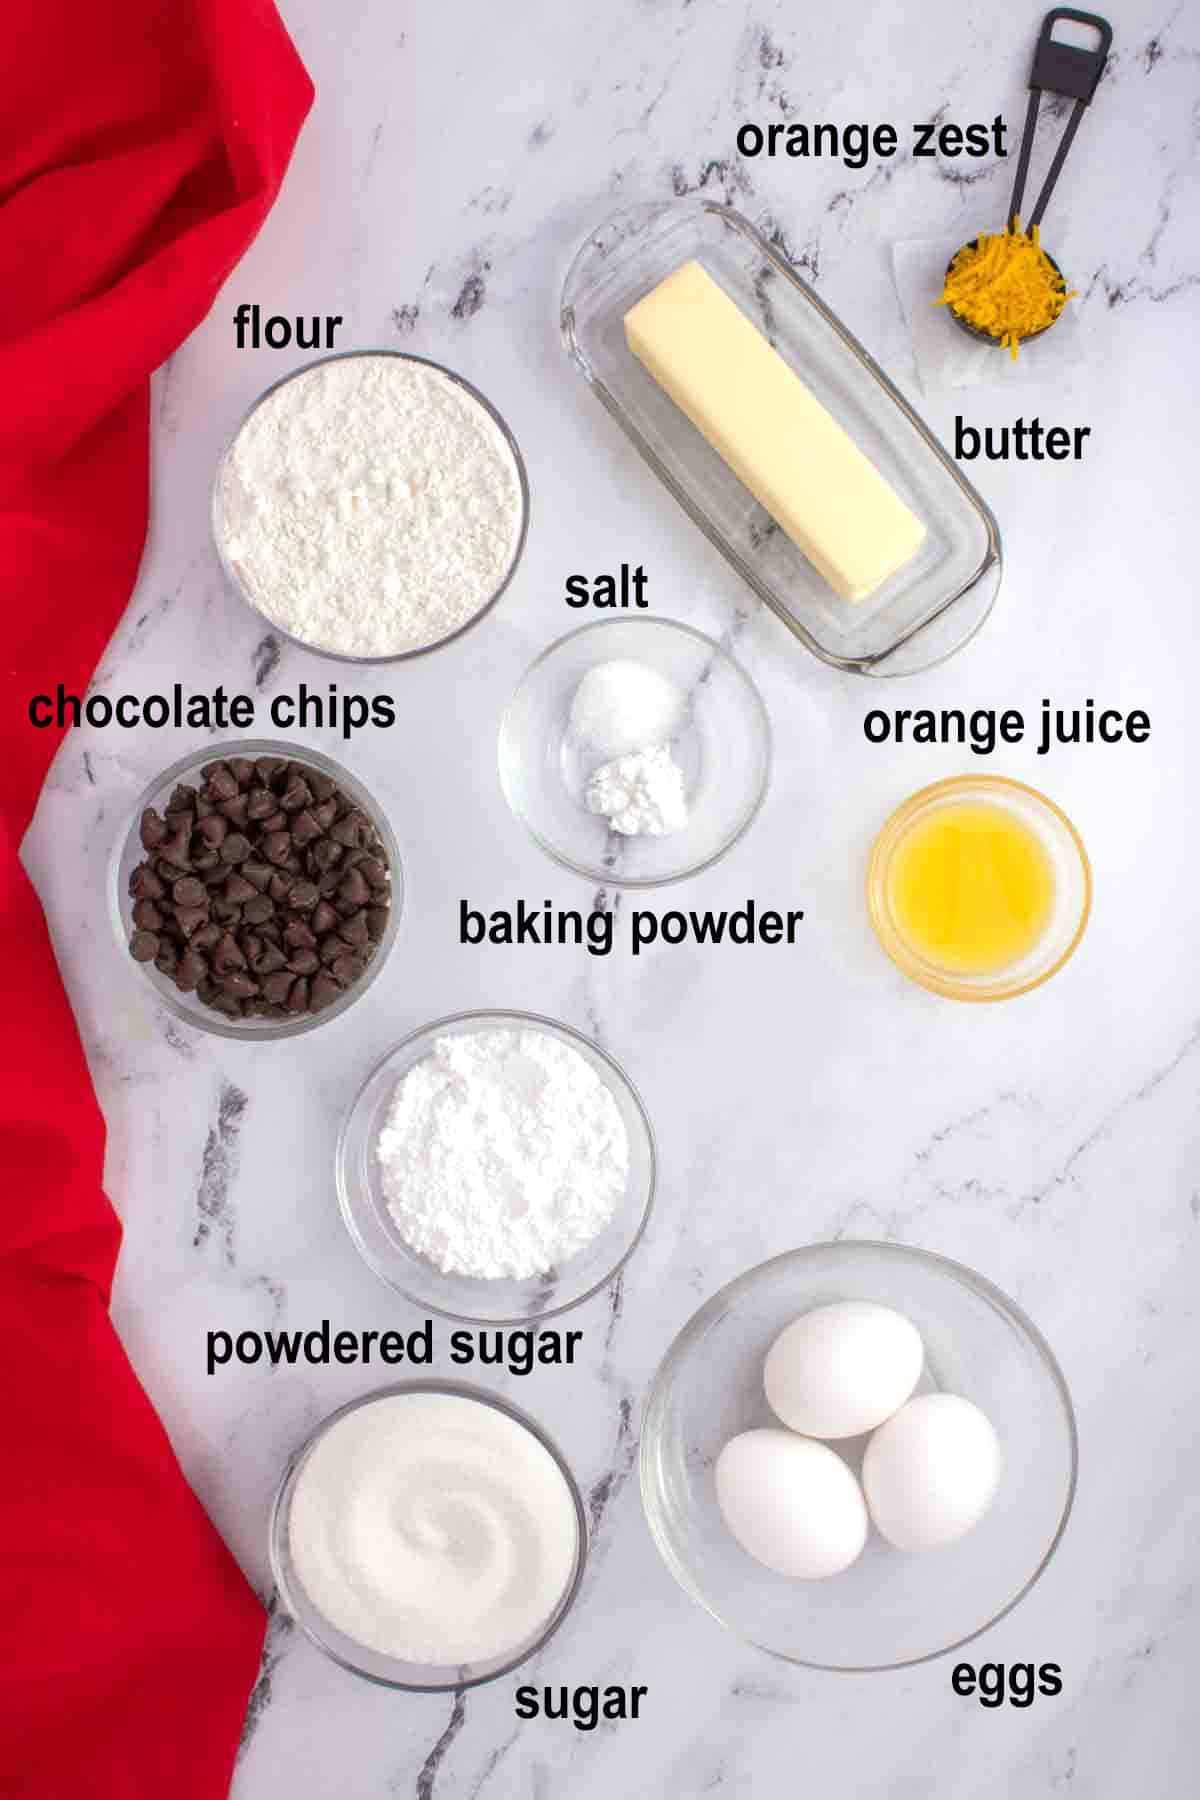 orange zest, flour, salt, butter, chocolate, orange juice, baking powder, sugars, eggs